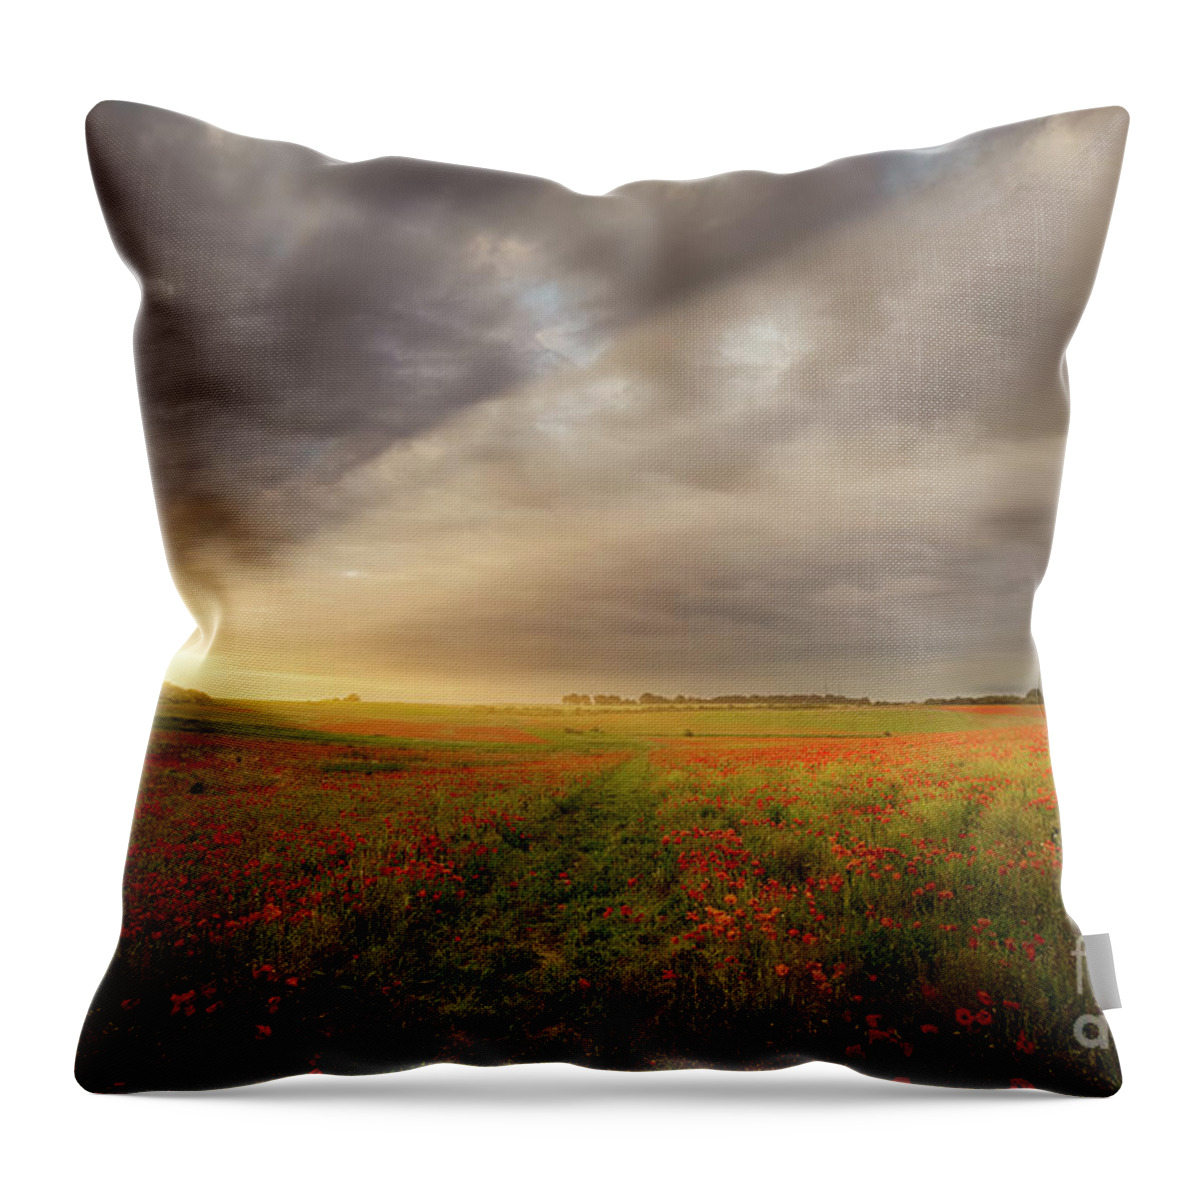 Poppies Throw Pillow featuring the photograph Norfolk poppy field sunrise landscape by Simon Bratt